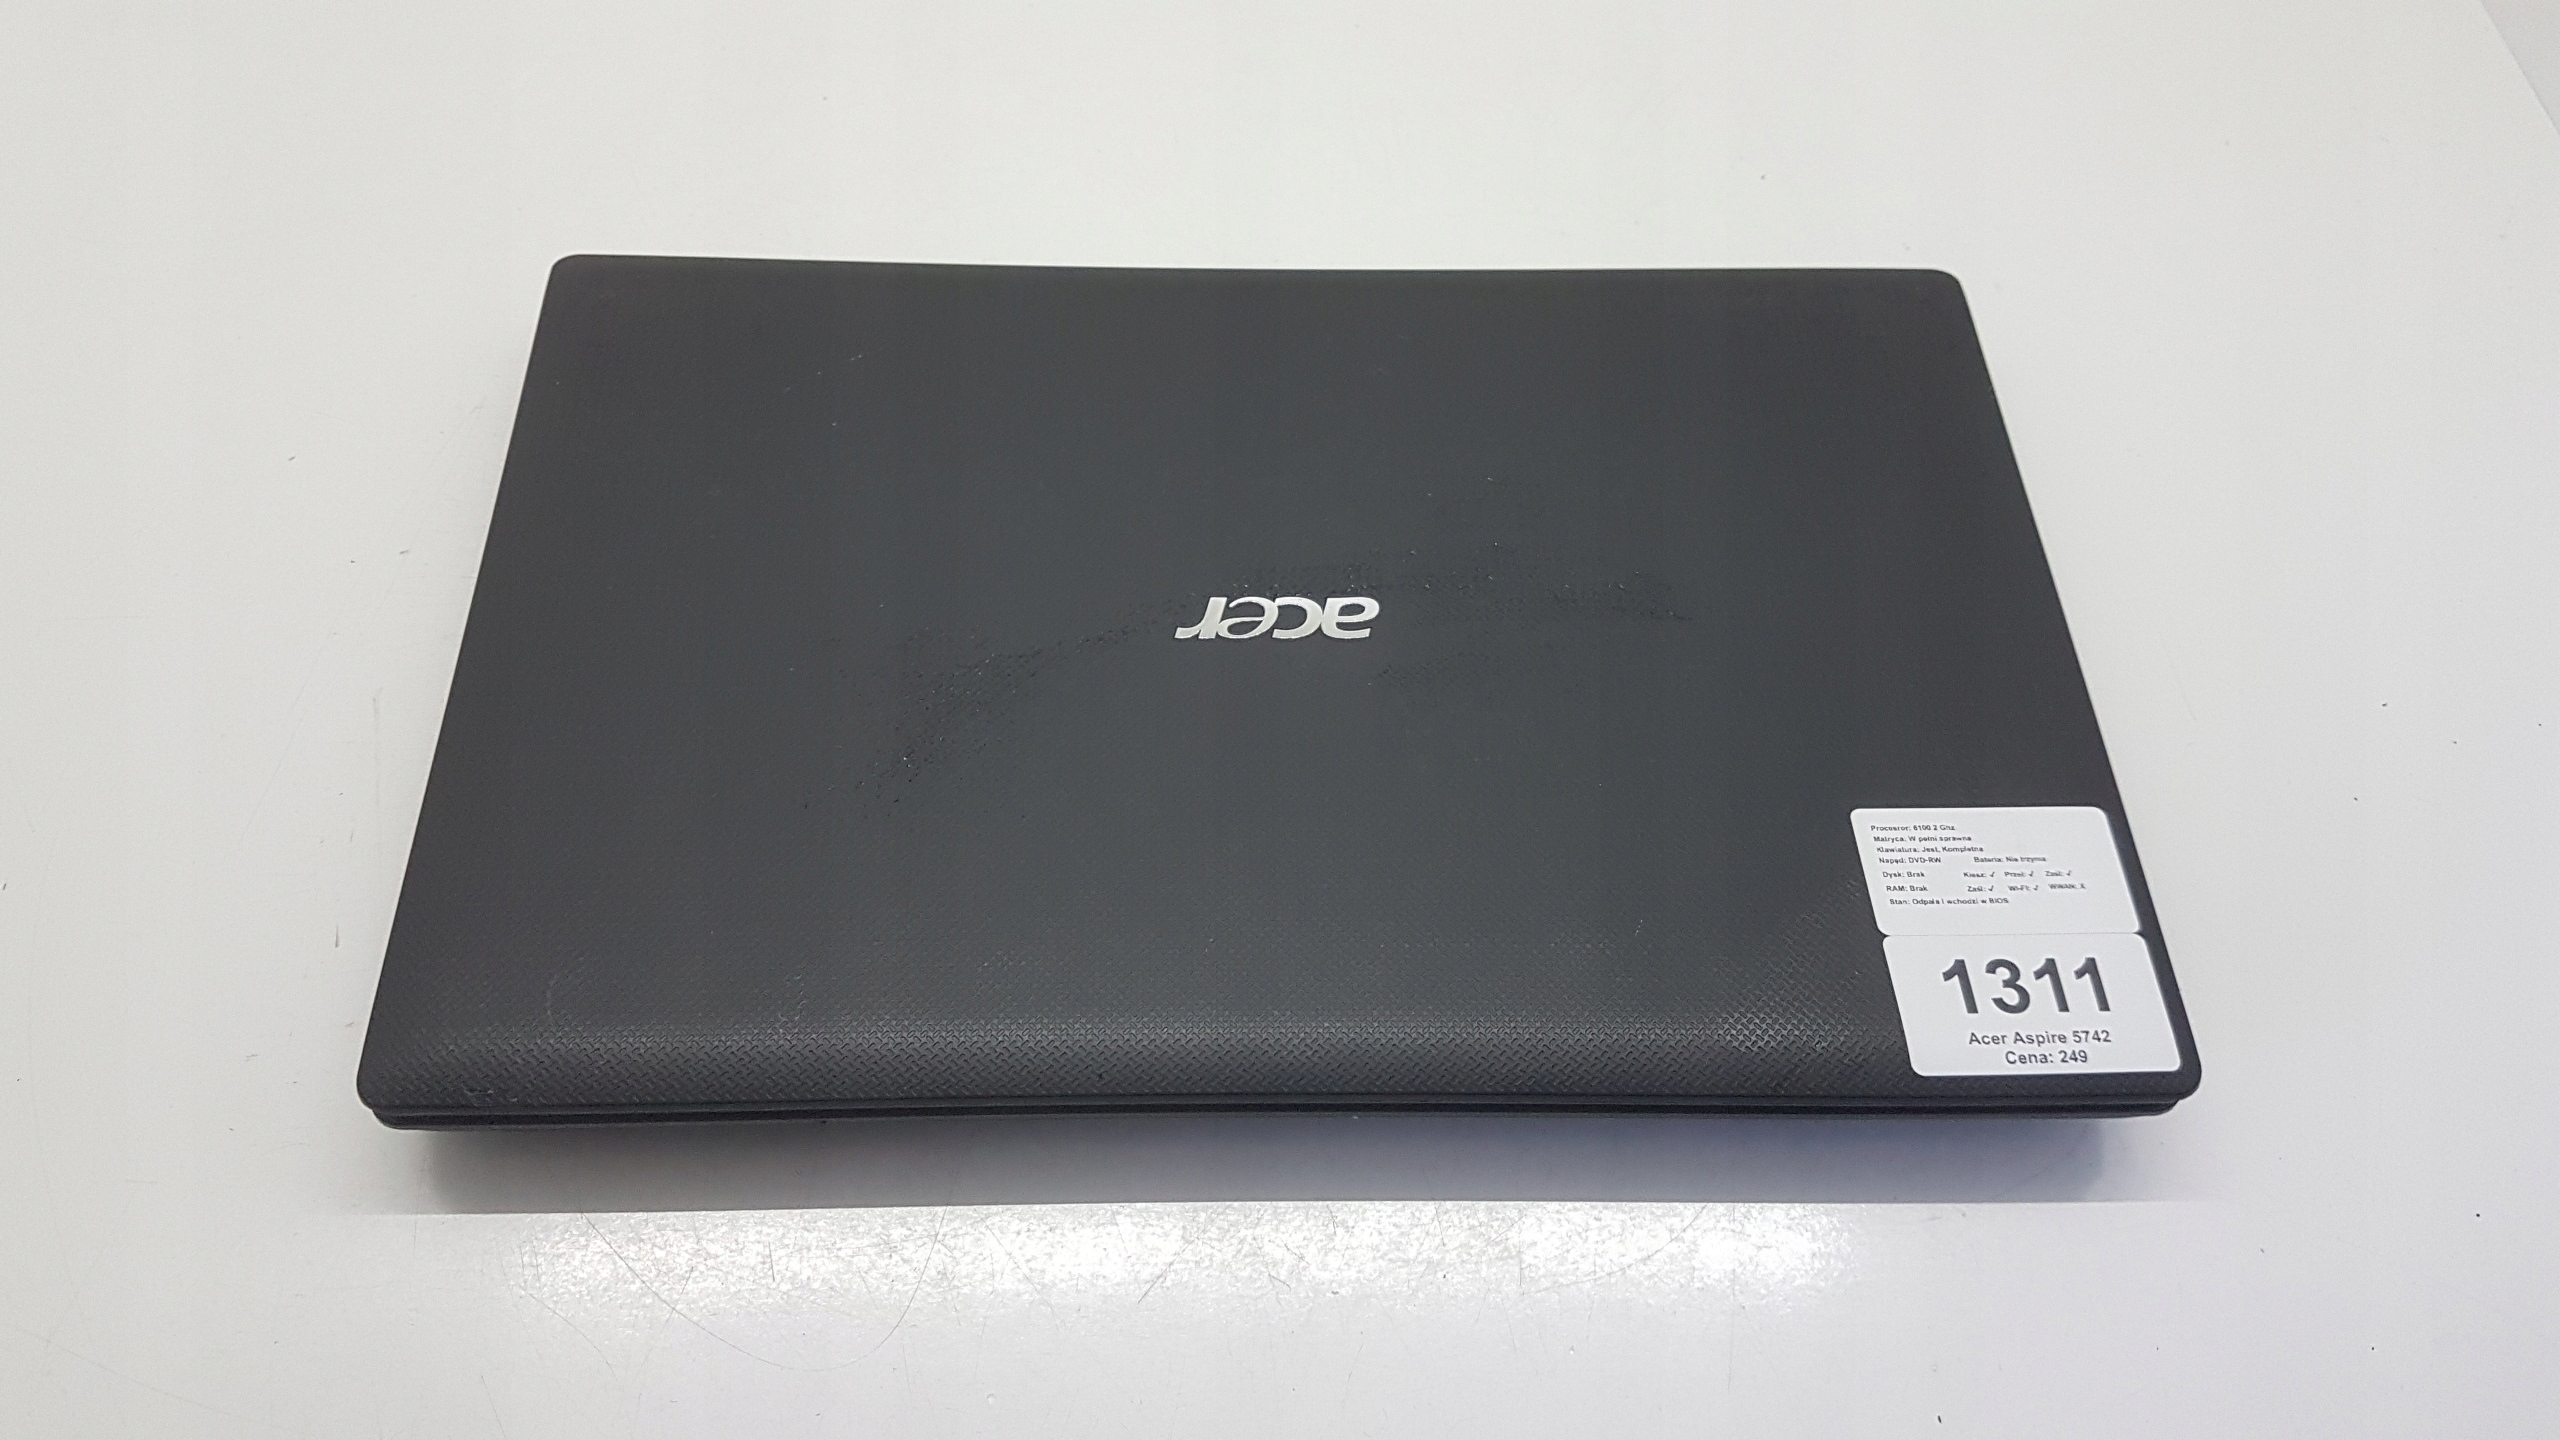 Notebook Acer Aspire 5742 (1311).